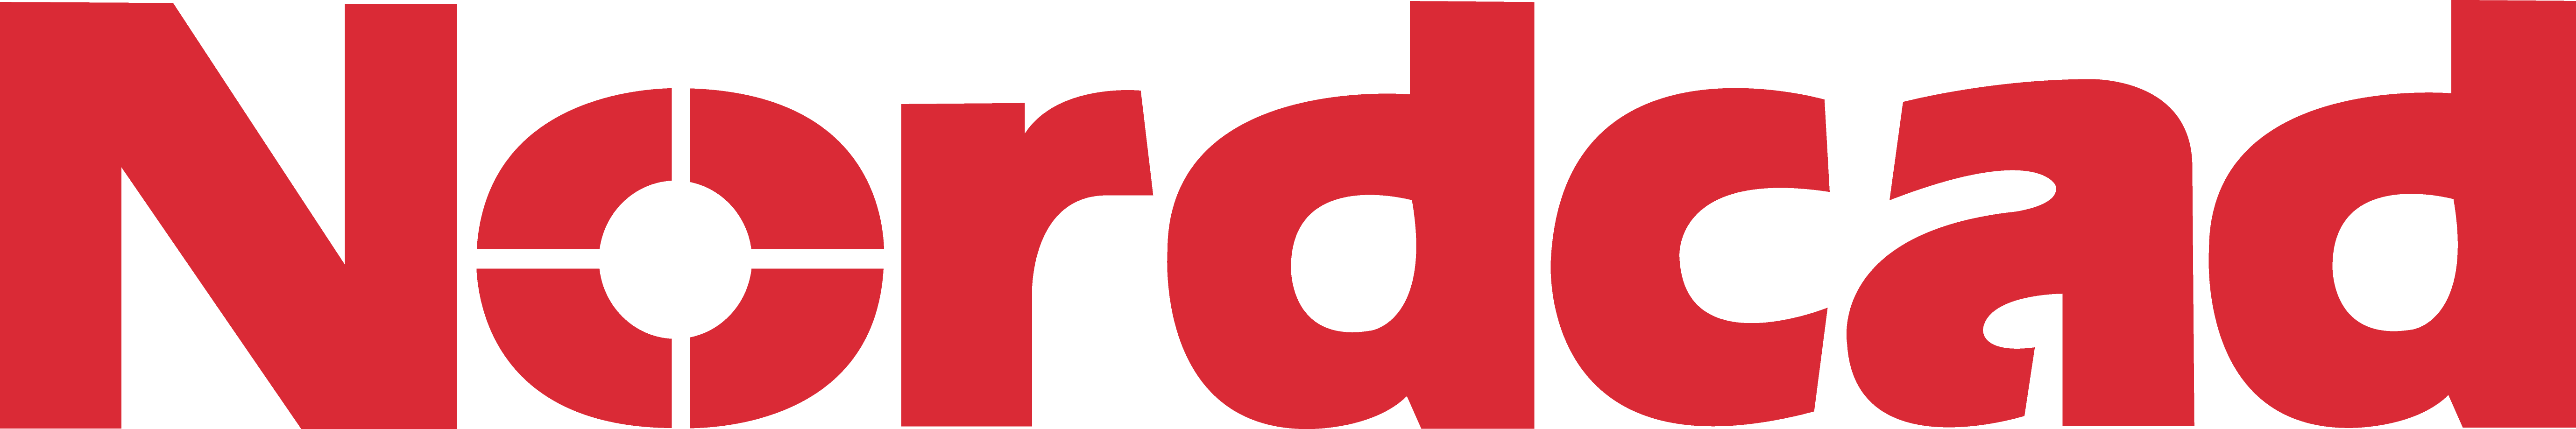 Nordcad AB logo